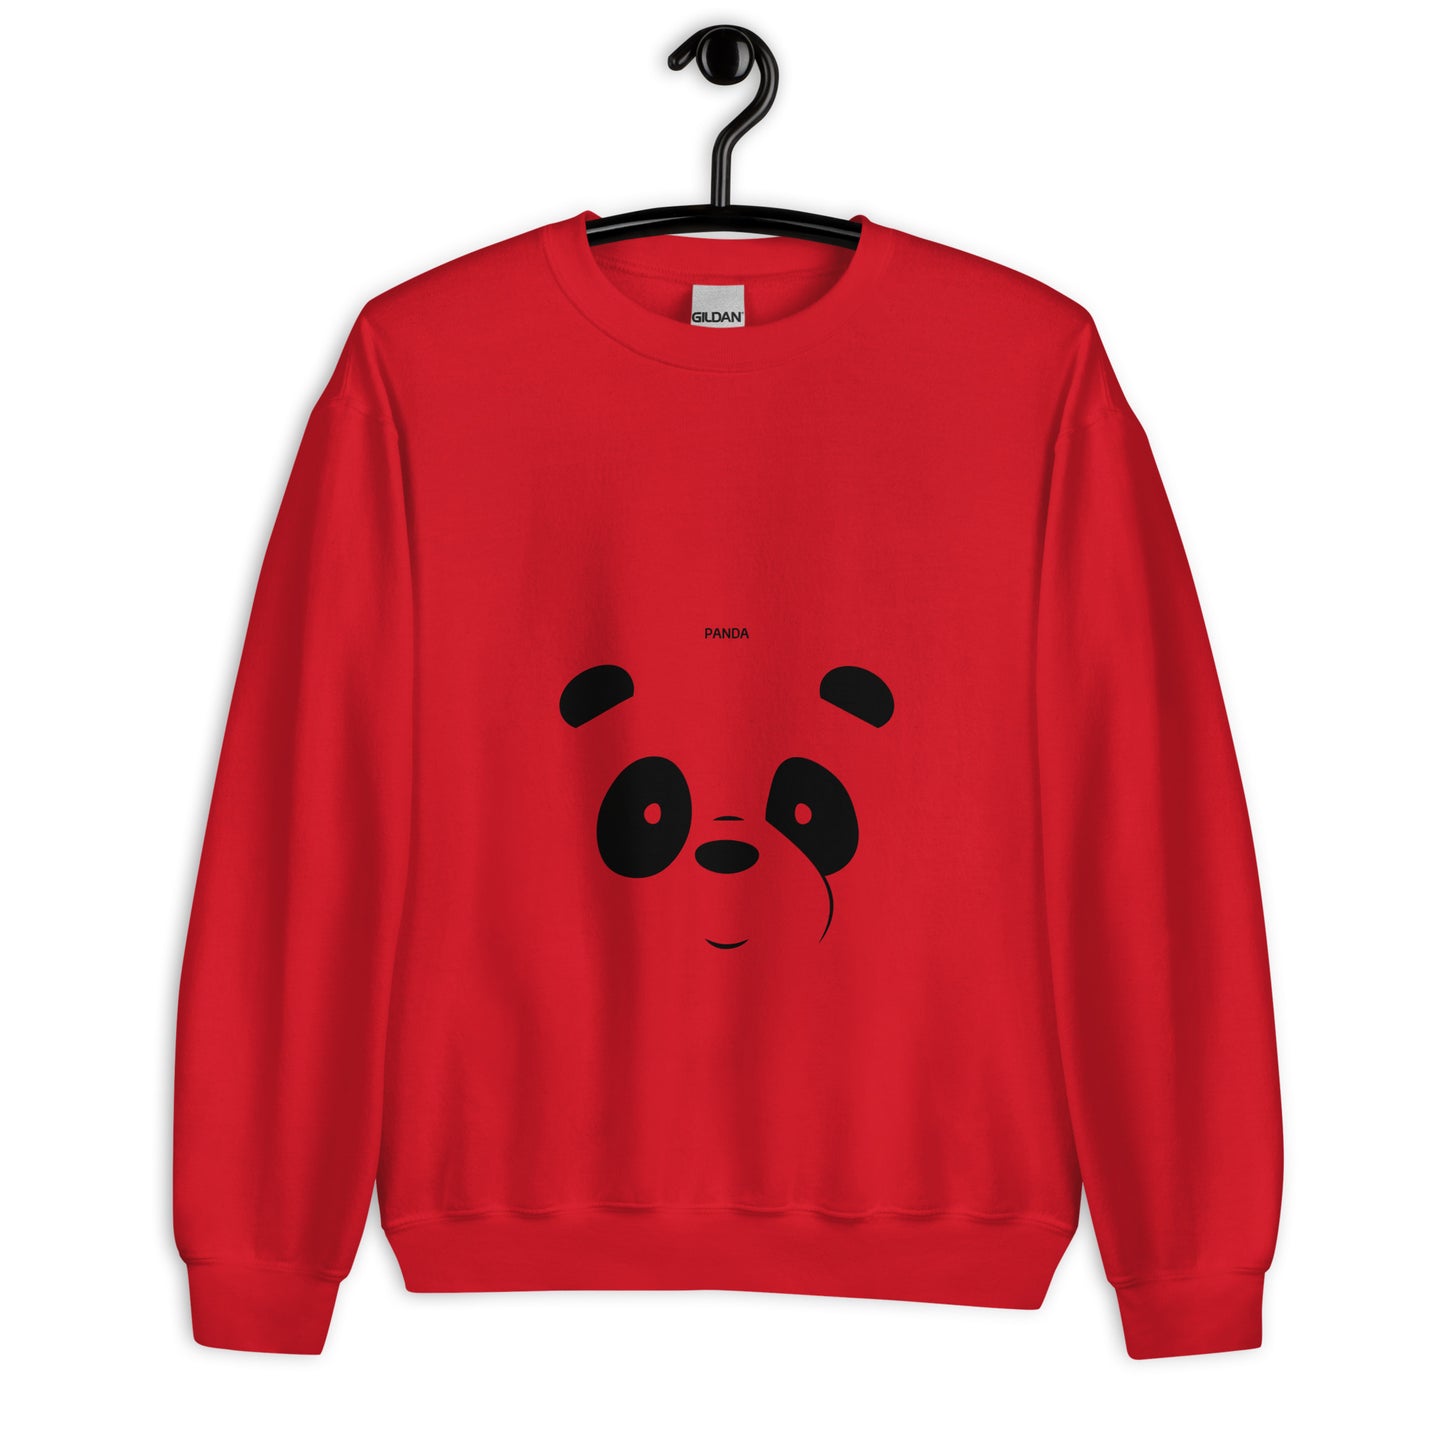 Cute Panda Design Unisex Sweatshirt